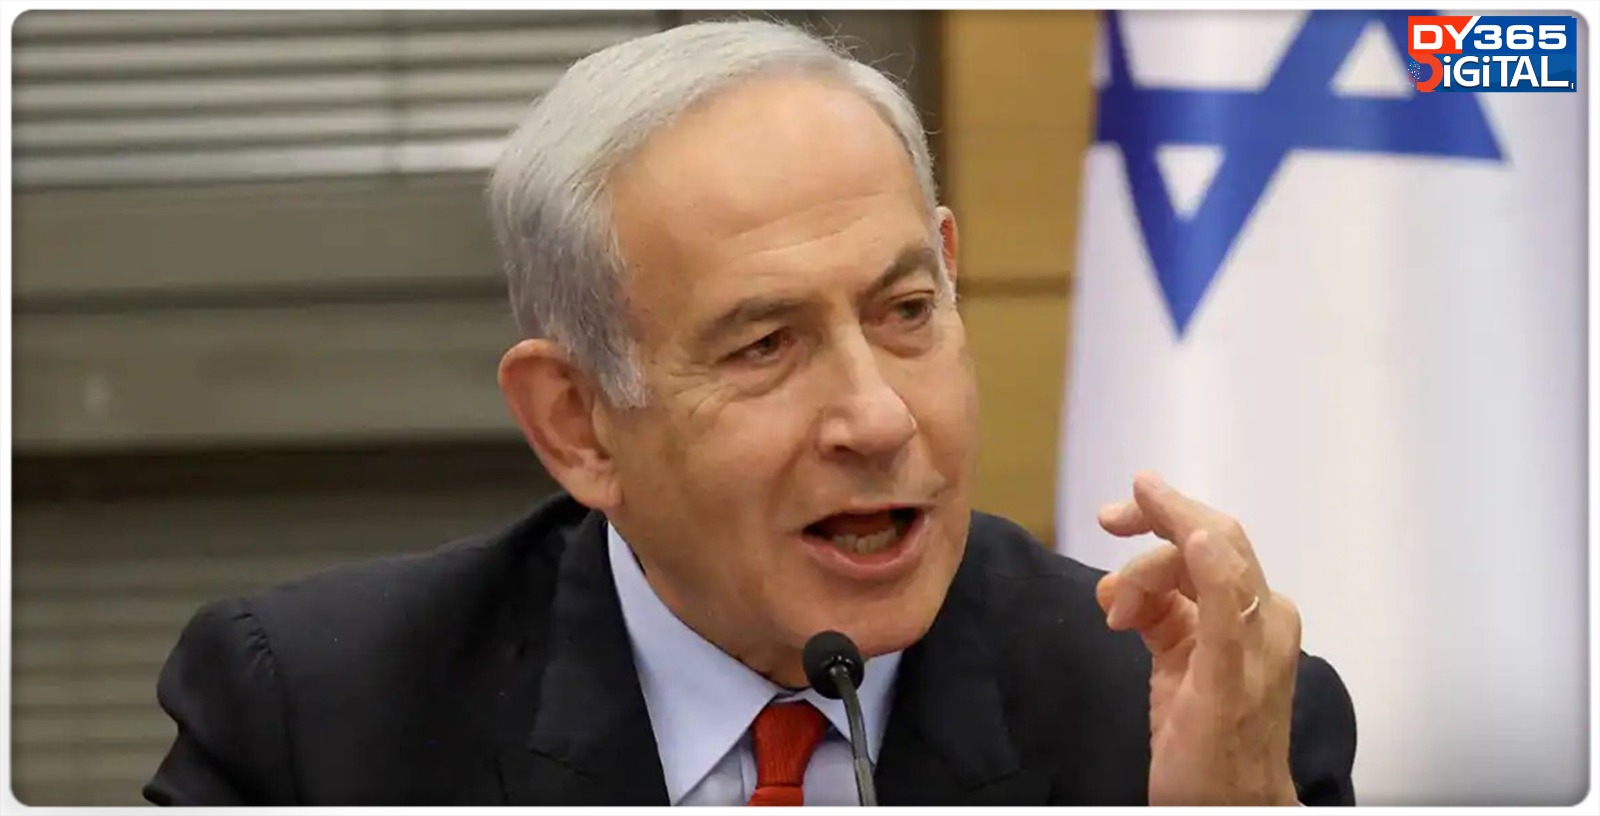 Israel War Cabinet Minister Quits Over Gaza Plan
